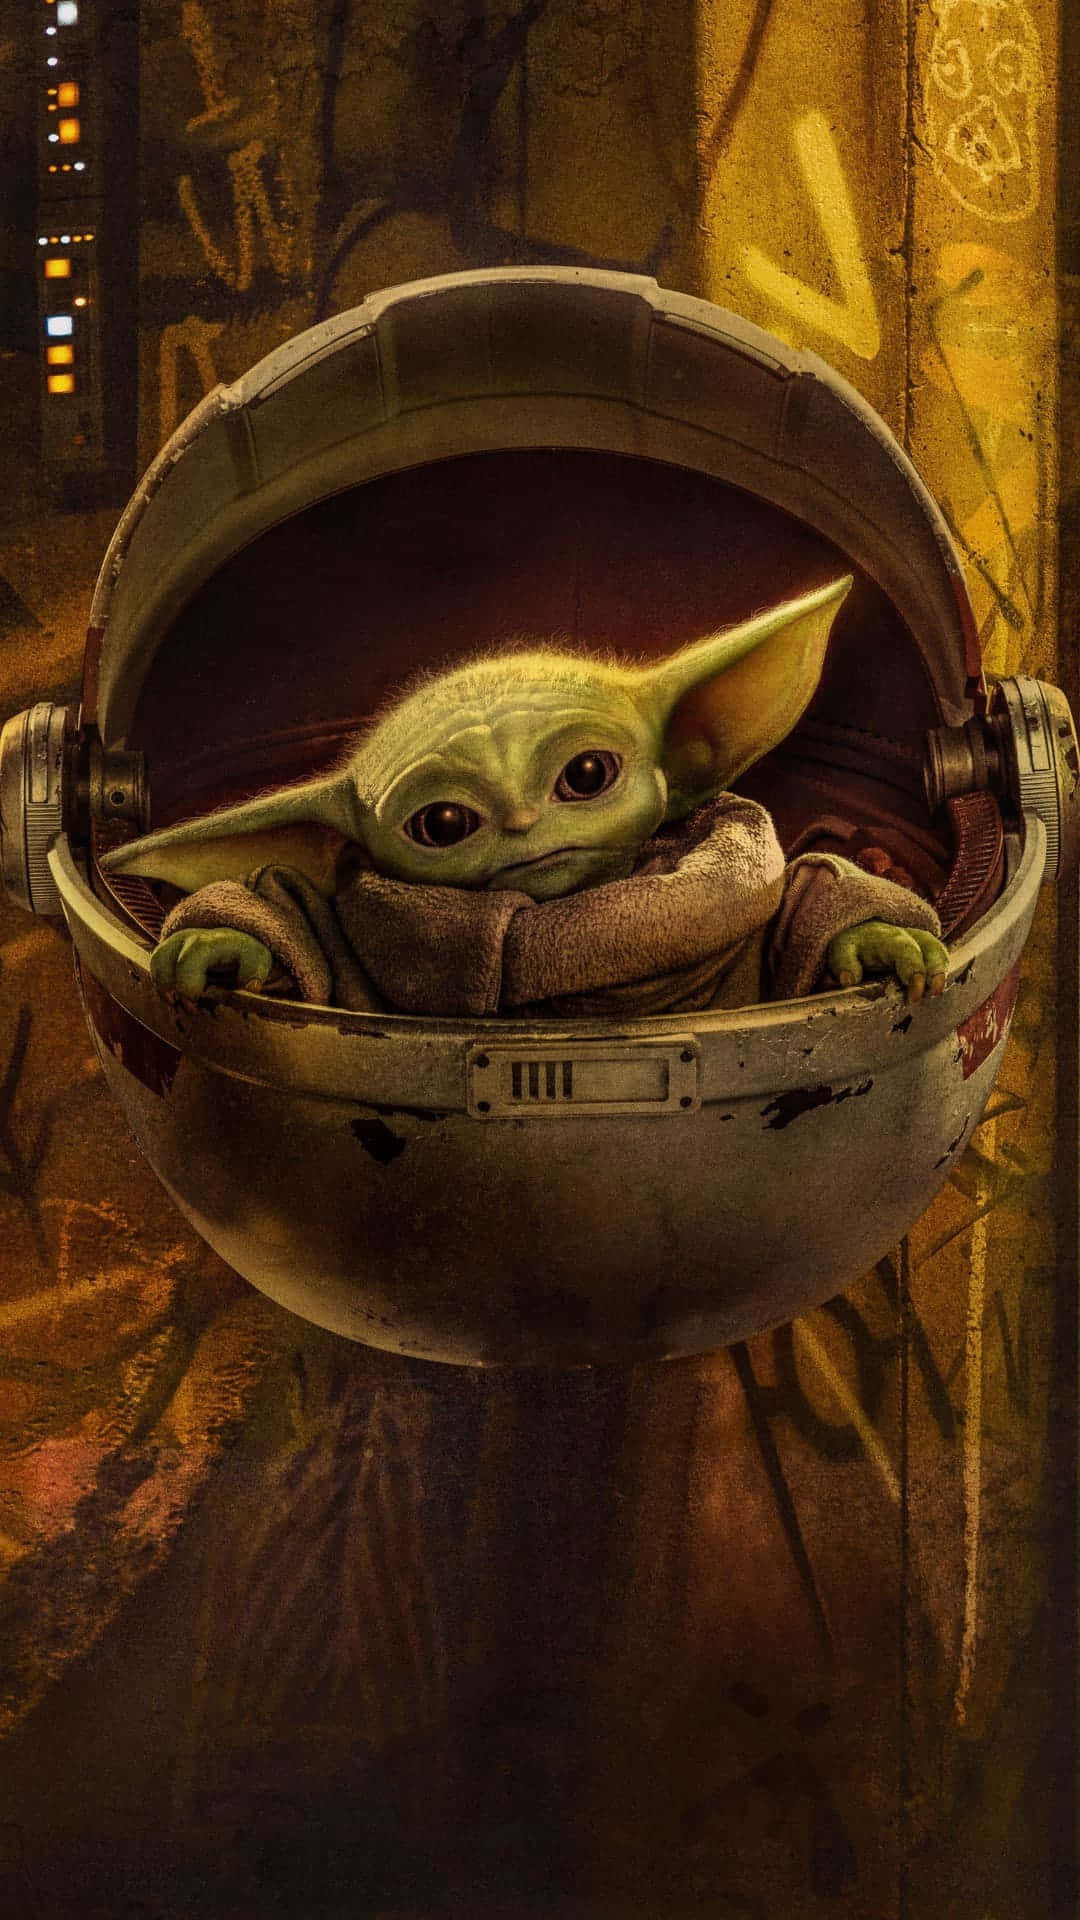 Få det officielle Baby Yoda telefon for at deltage i hans eventyr! Wallpaper